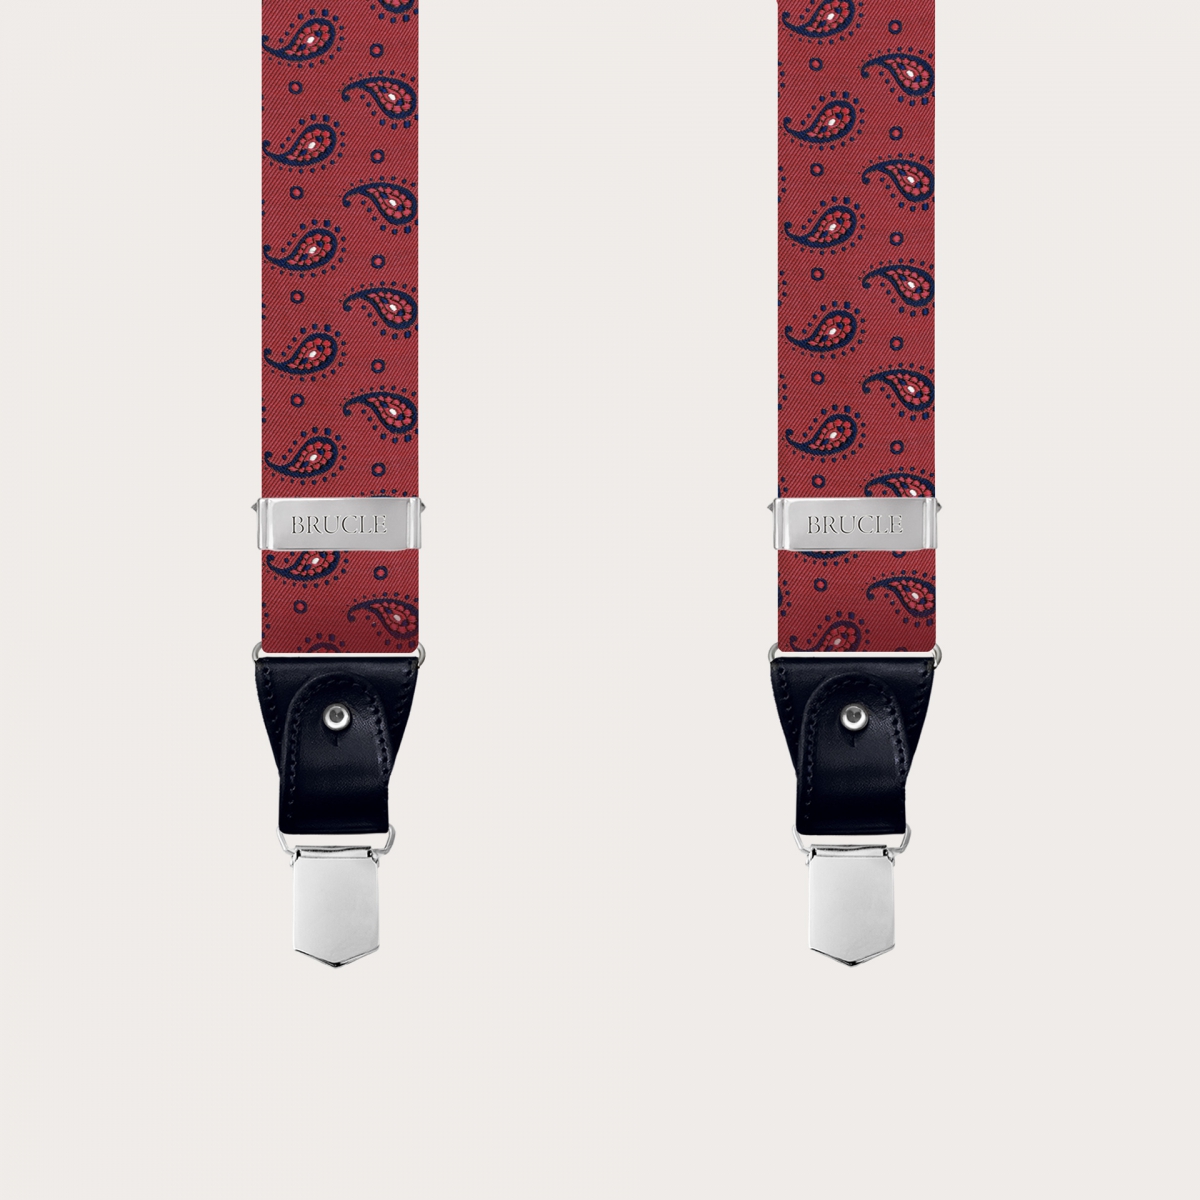 BRUCLE Hosenträger aus Seide mit rotem und blauem Paisley-Muster